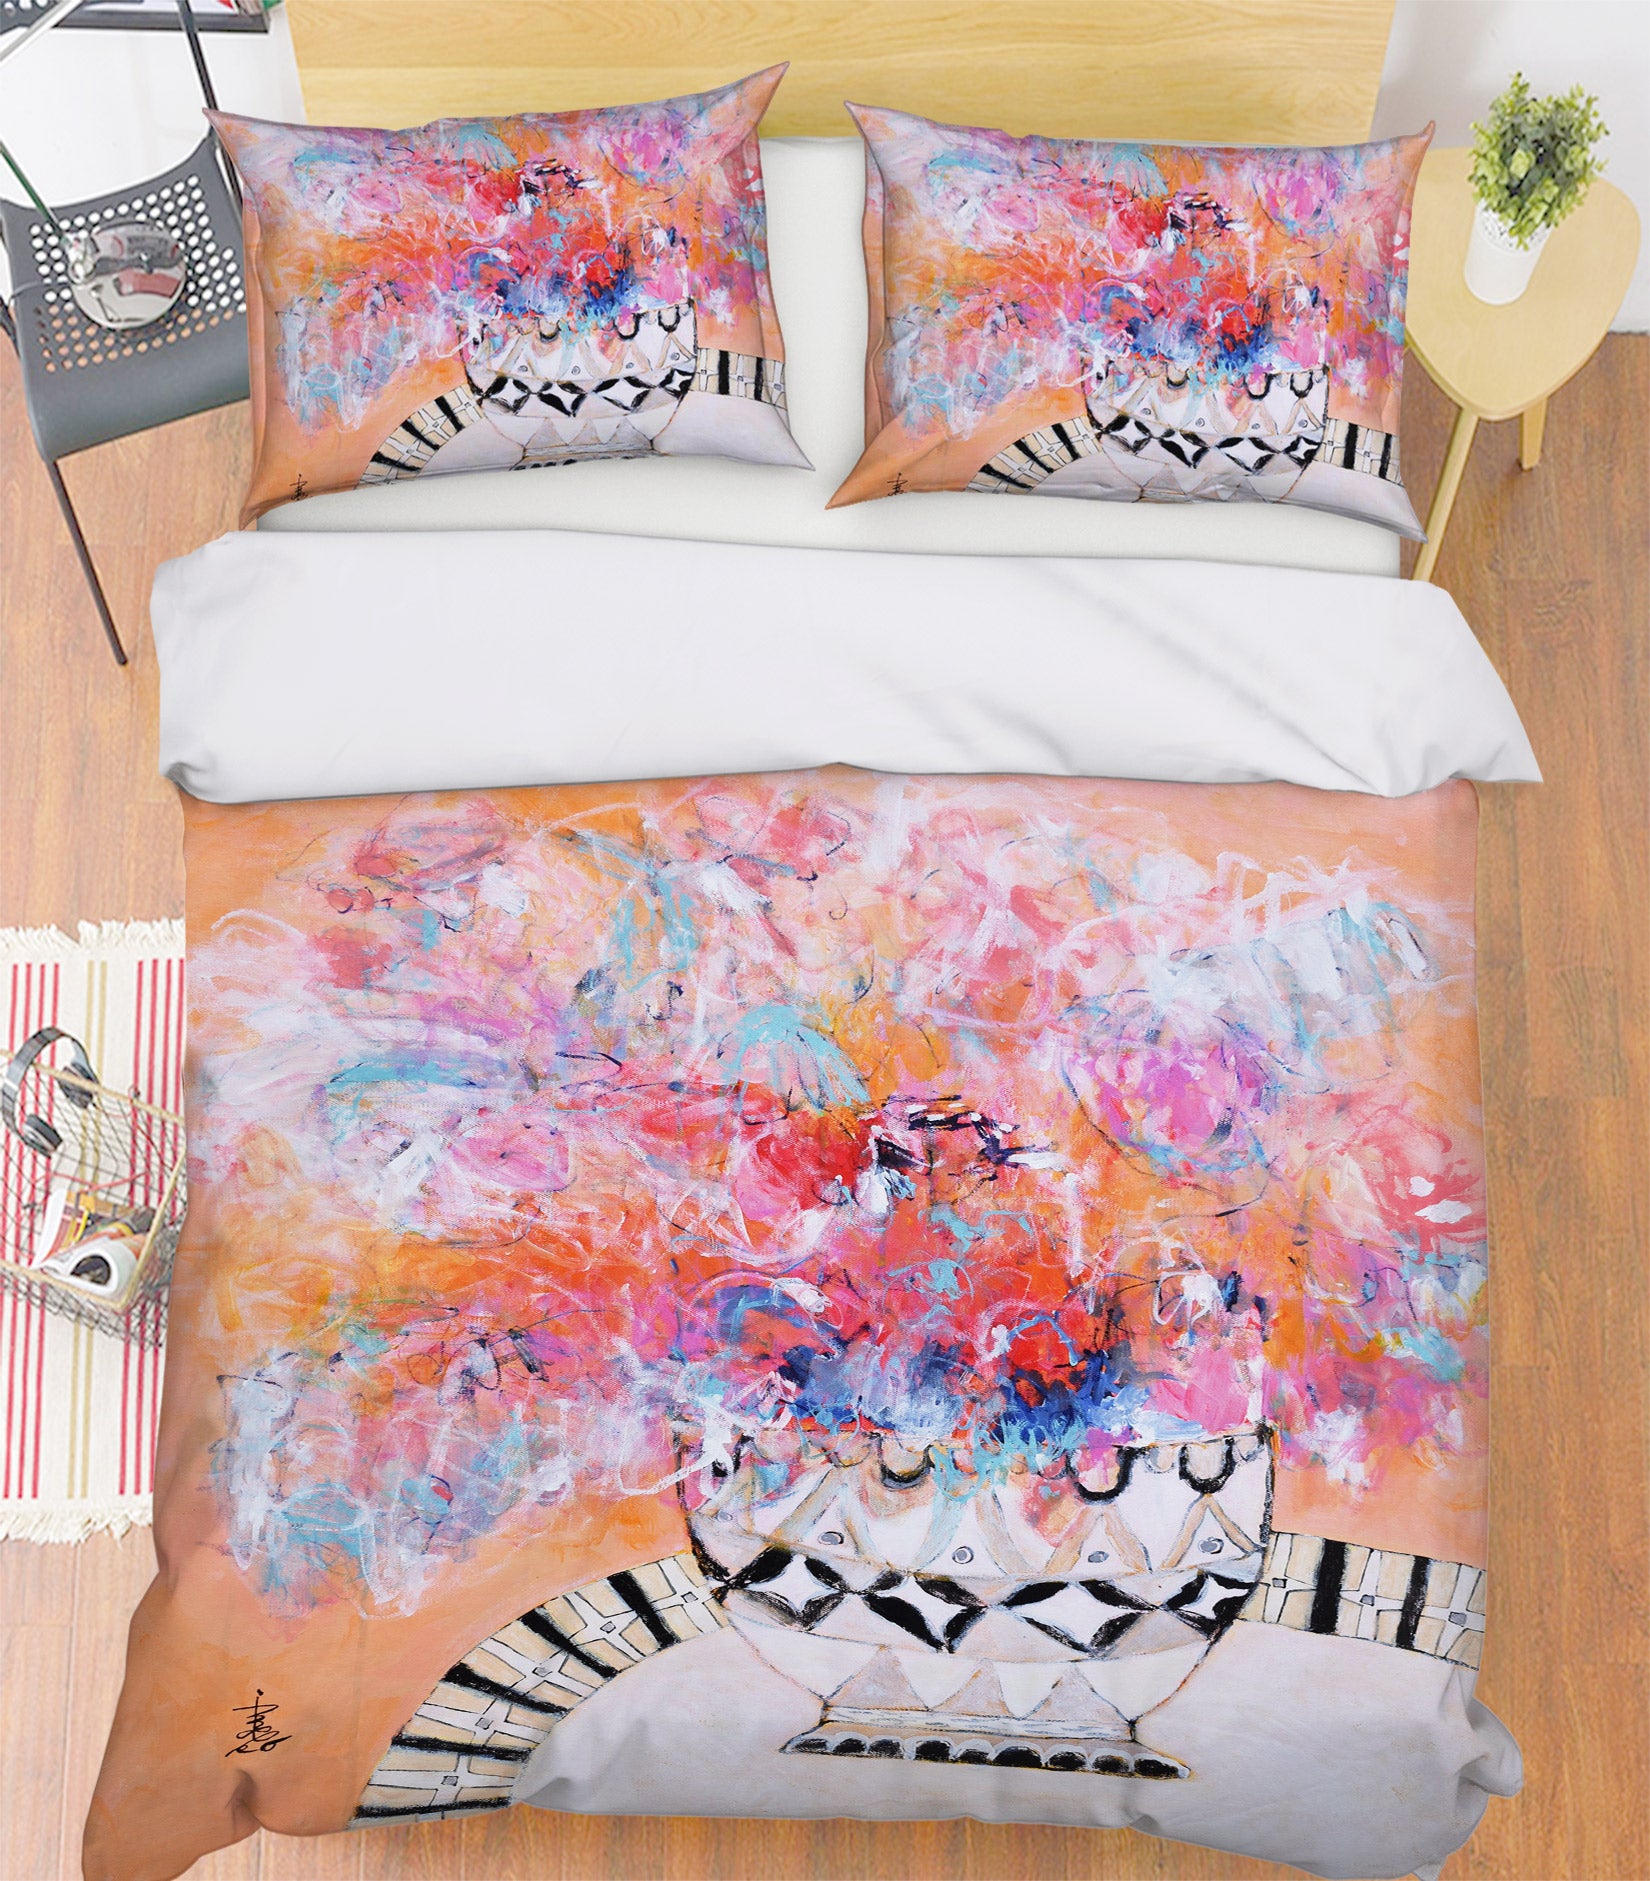 3D Watercolor Flowers 1184 Misako Chida Bedding Bed Pillowcases Quilt Cover Duvet Cover